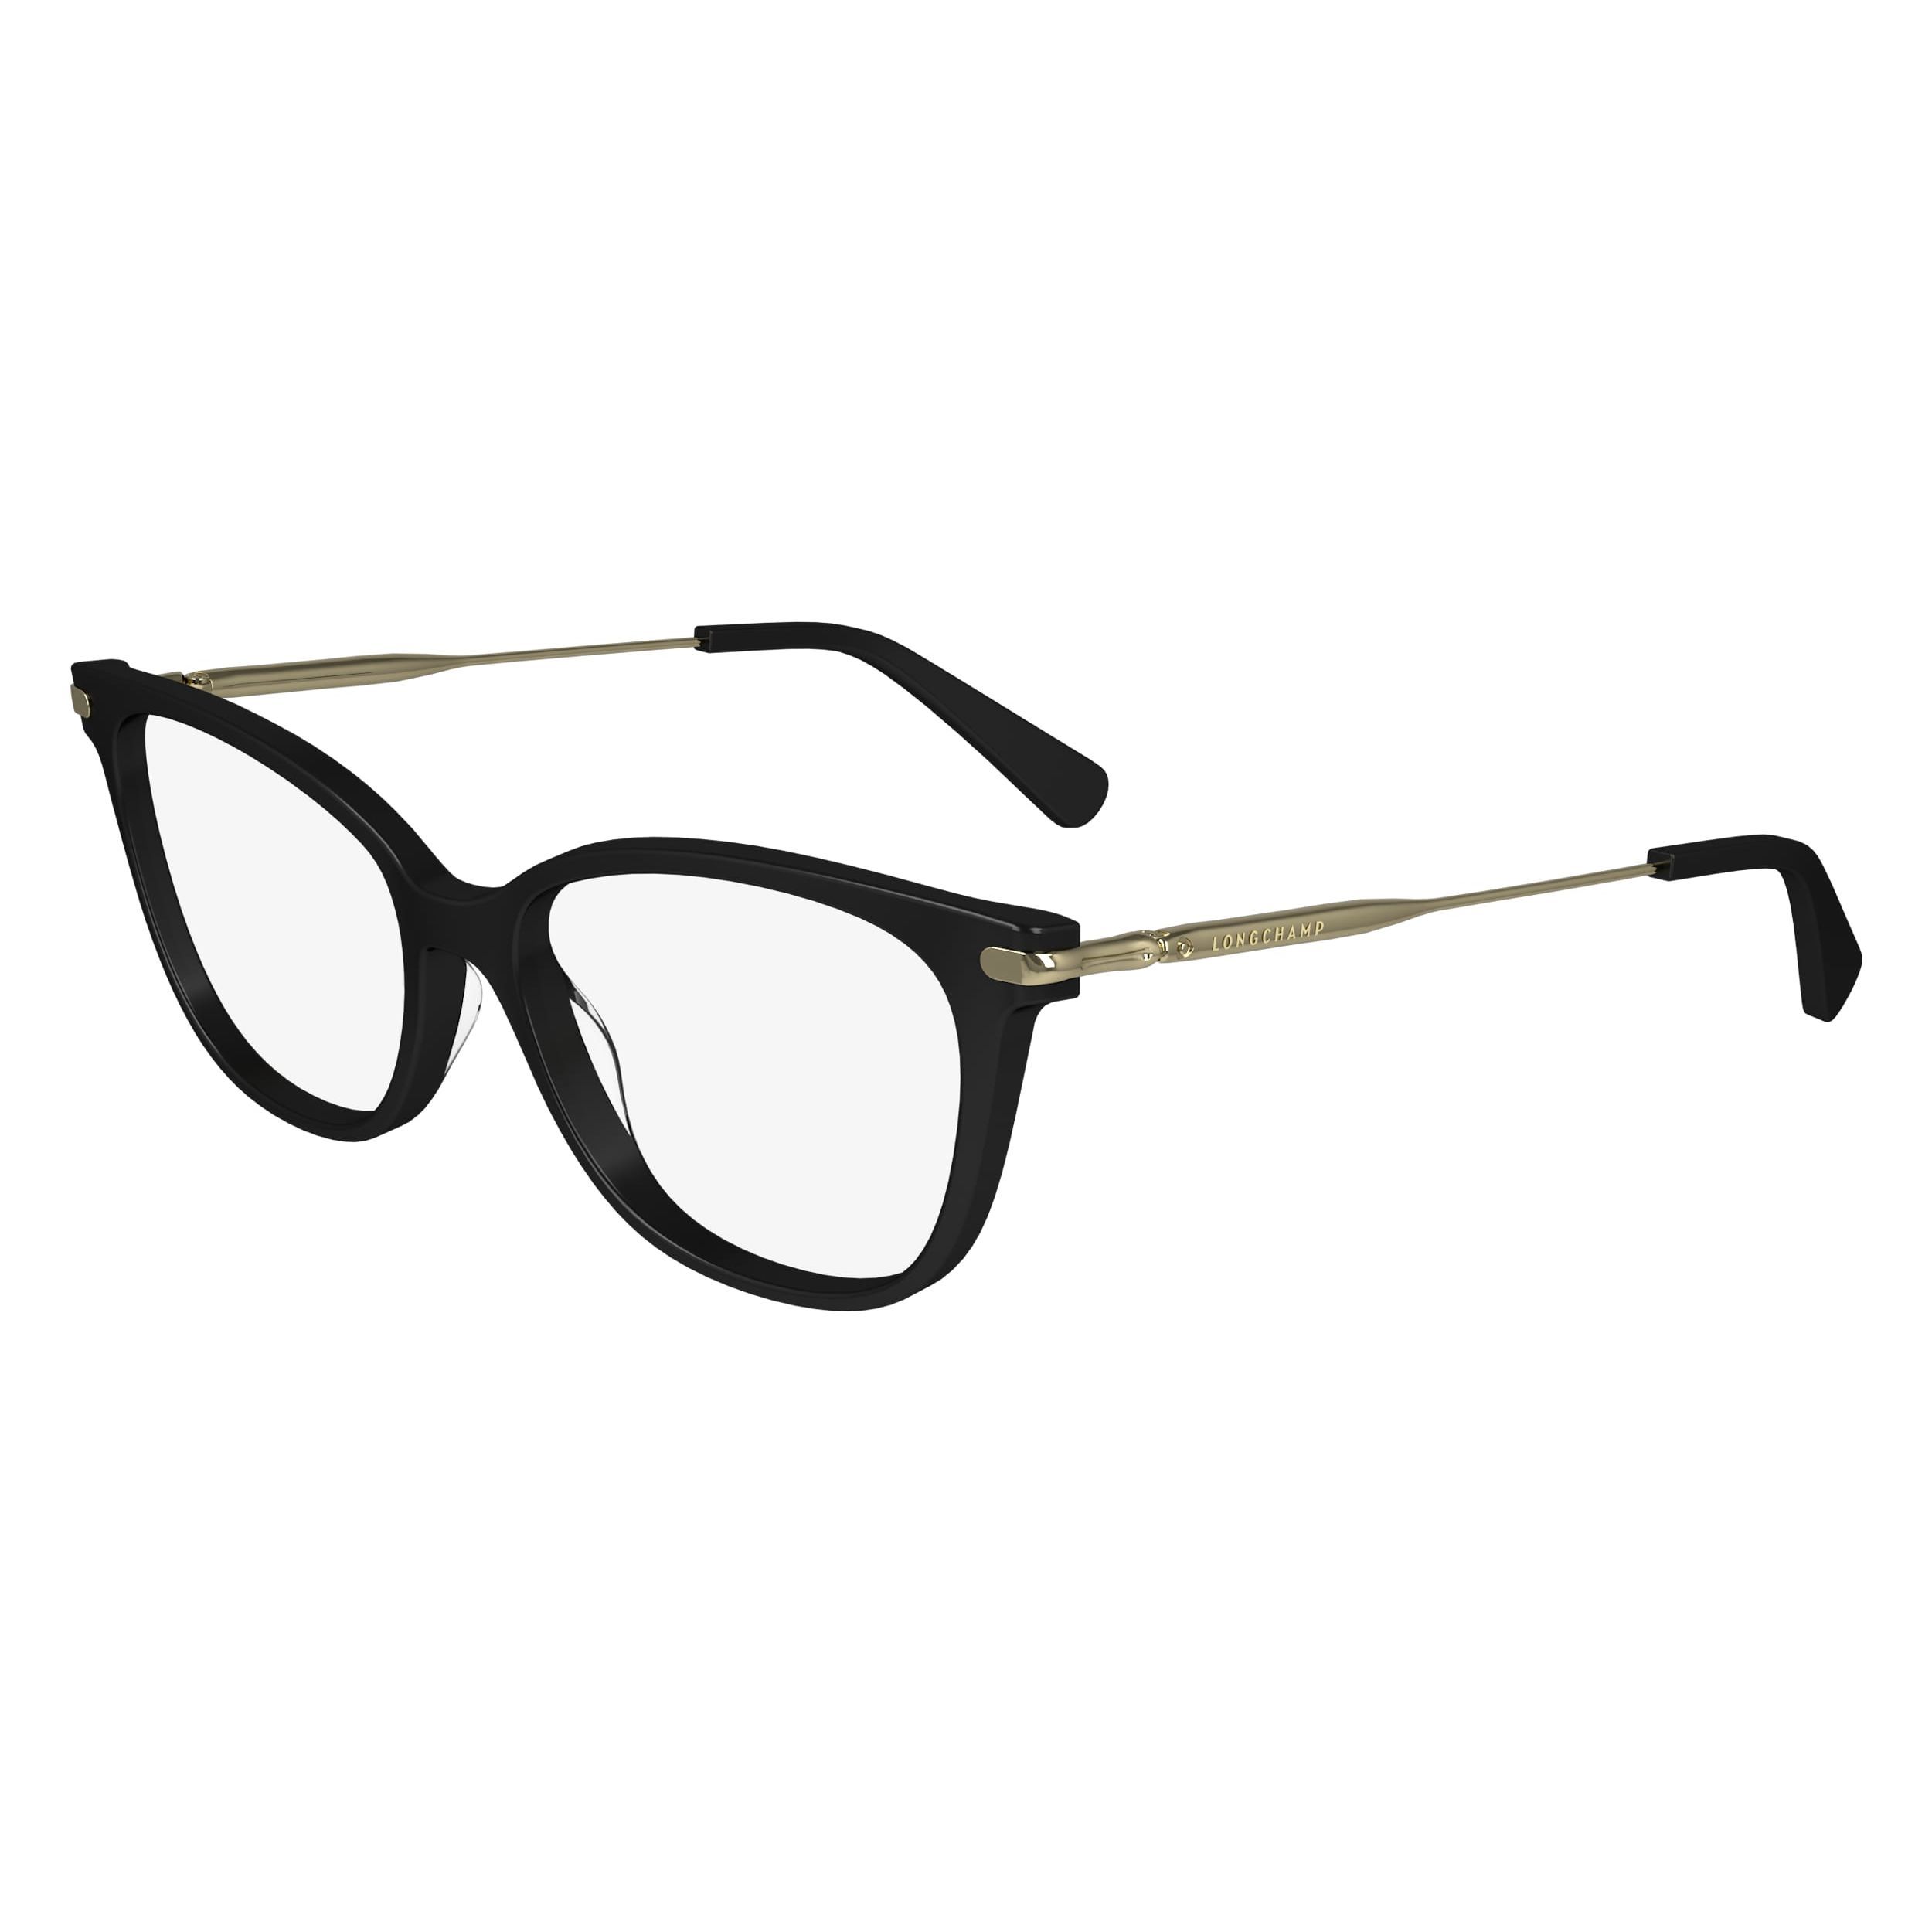 LO2735 Cat Eye Eyeglasses 001 - size 54